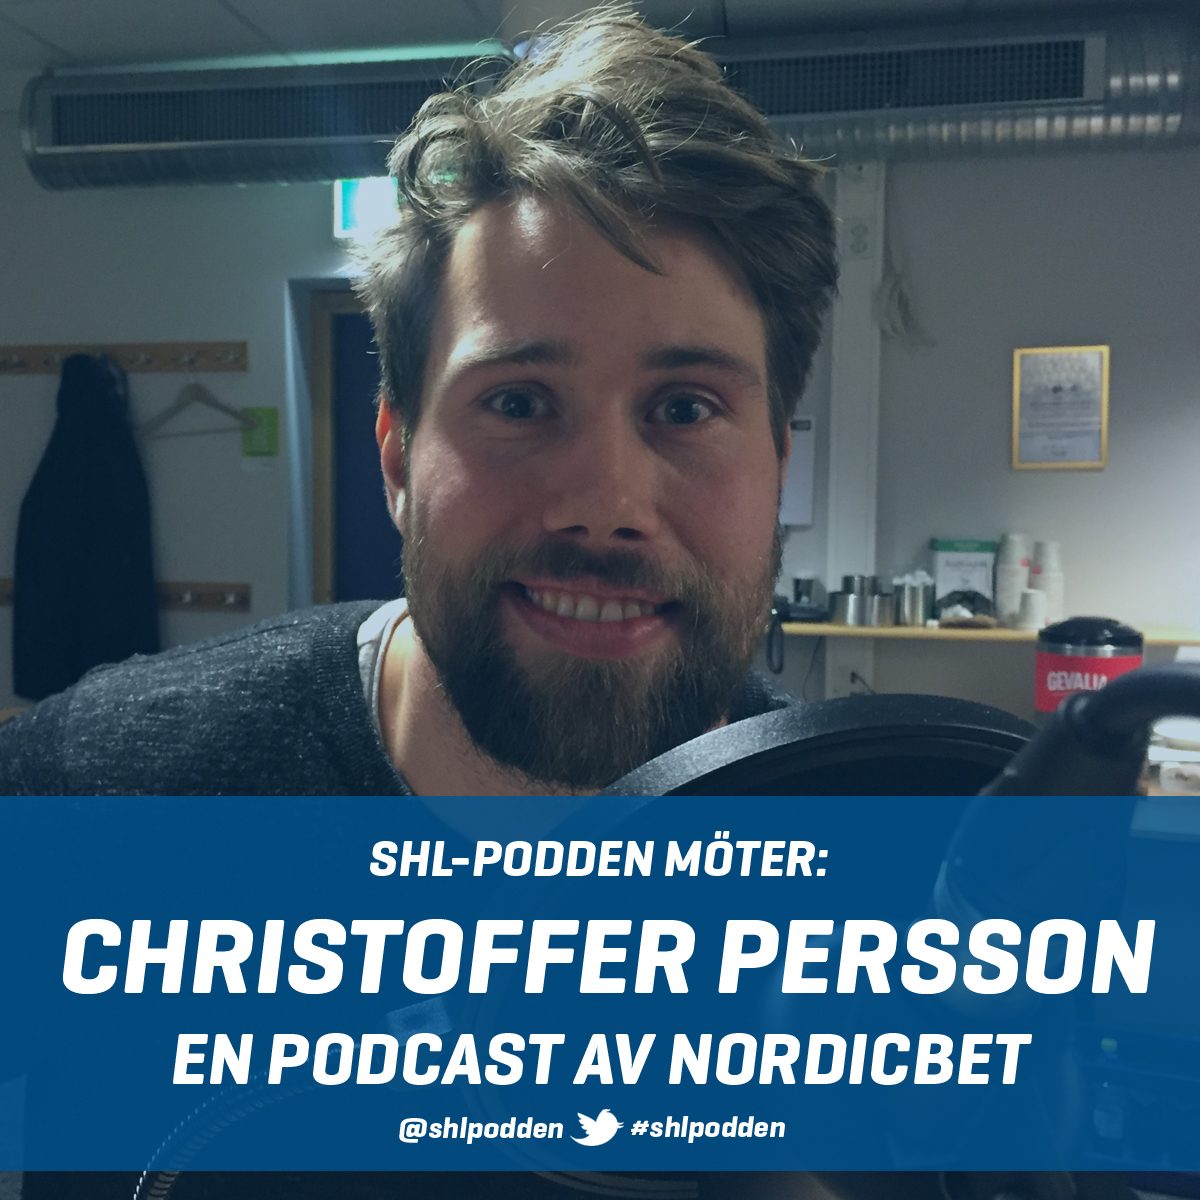 SHL-podden möter: Christoffer Persson